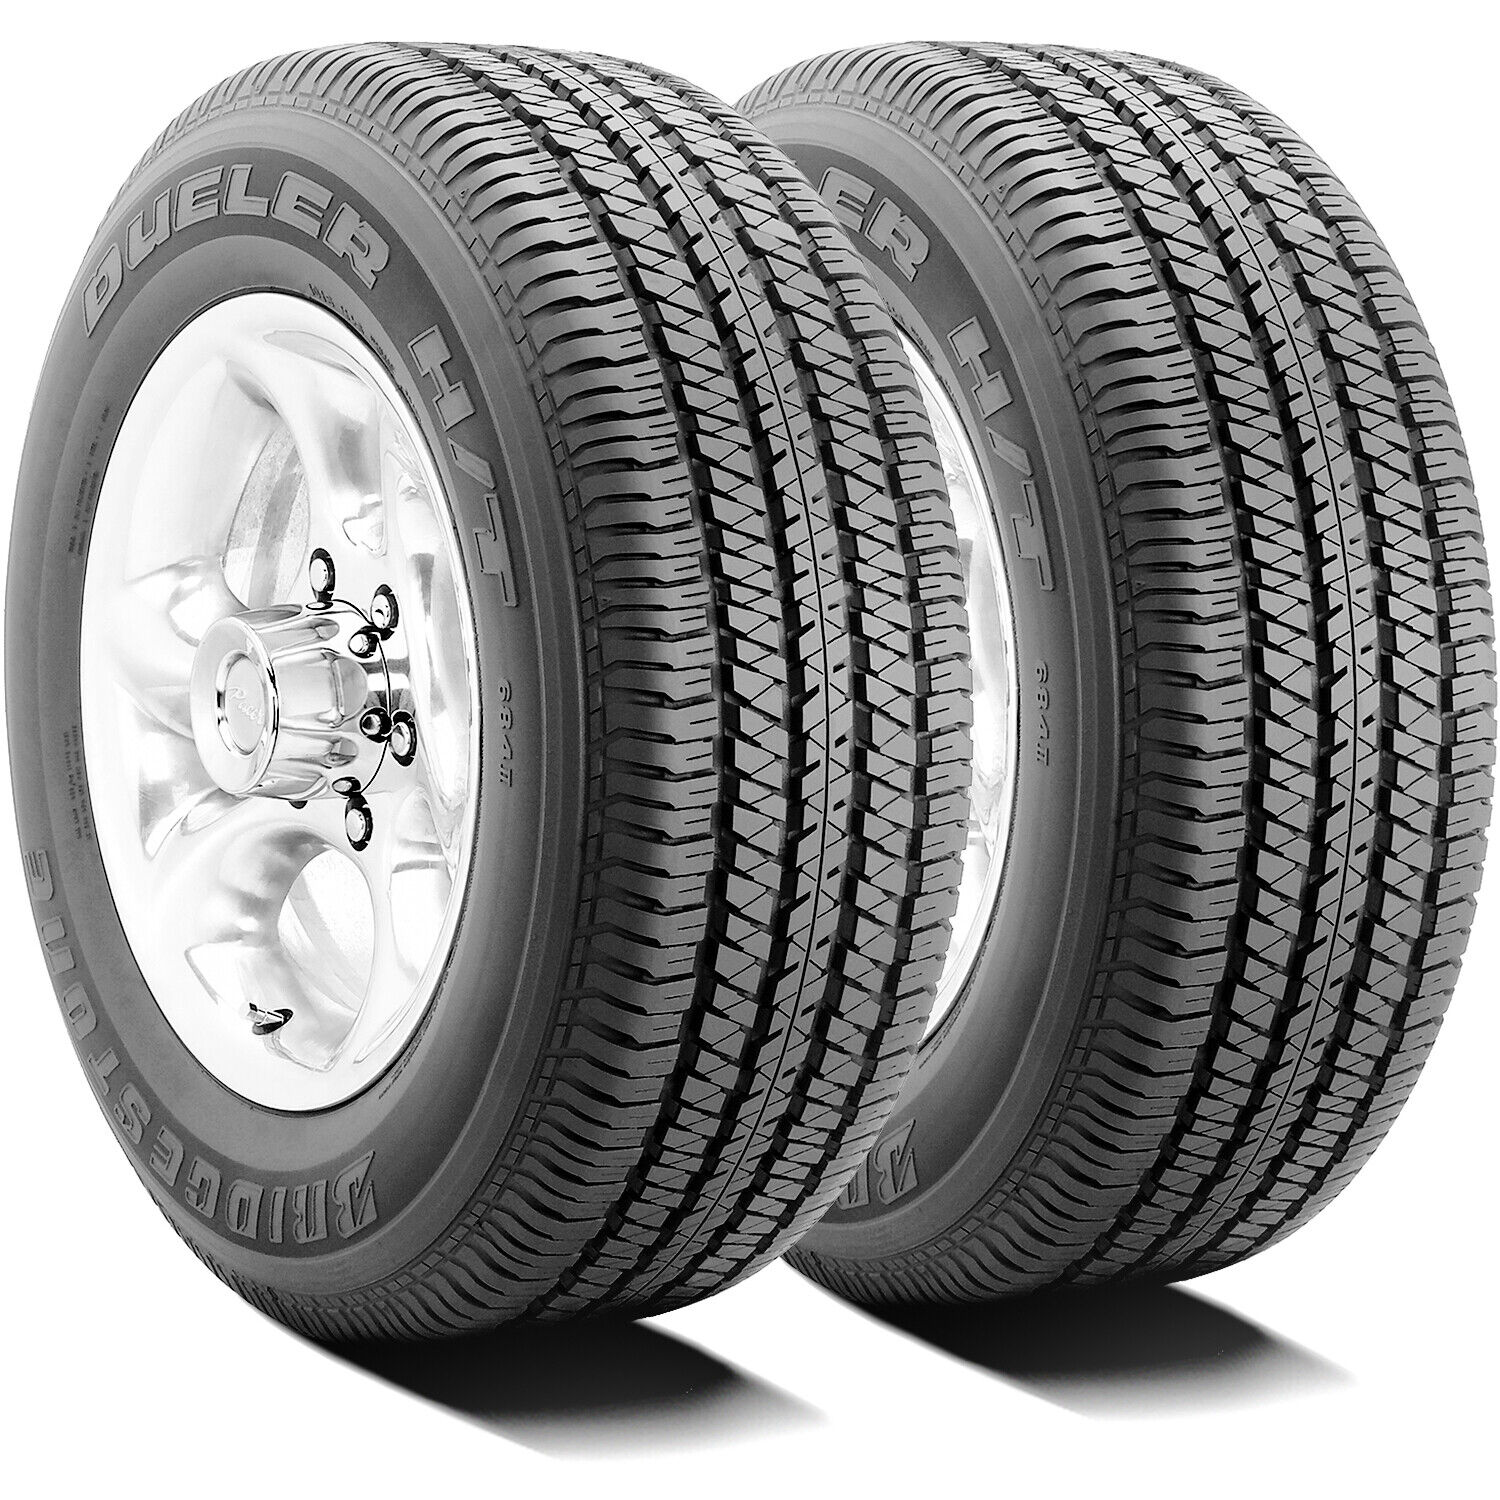 2 Tires Bridgestone Dueler H/T 684 II 265/70R17 113S (OE) AS Take Off (New)